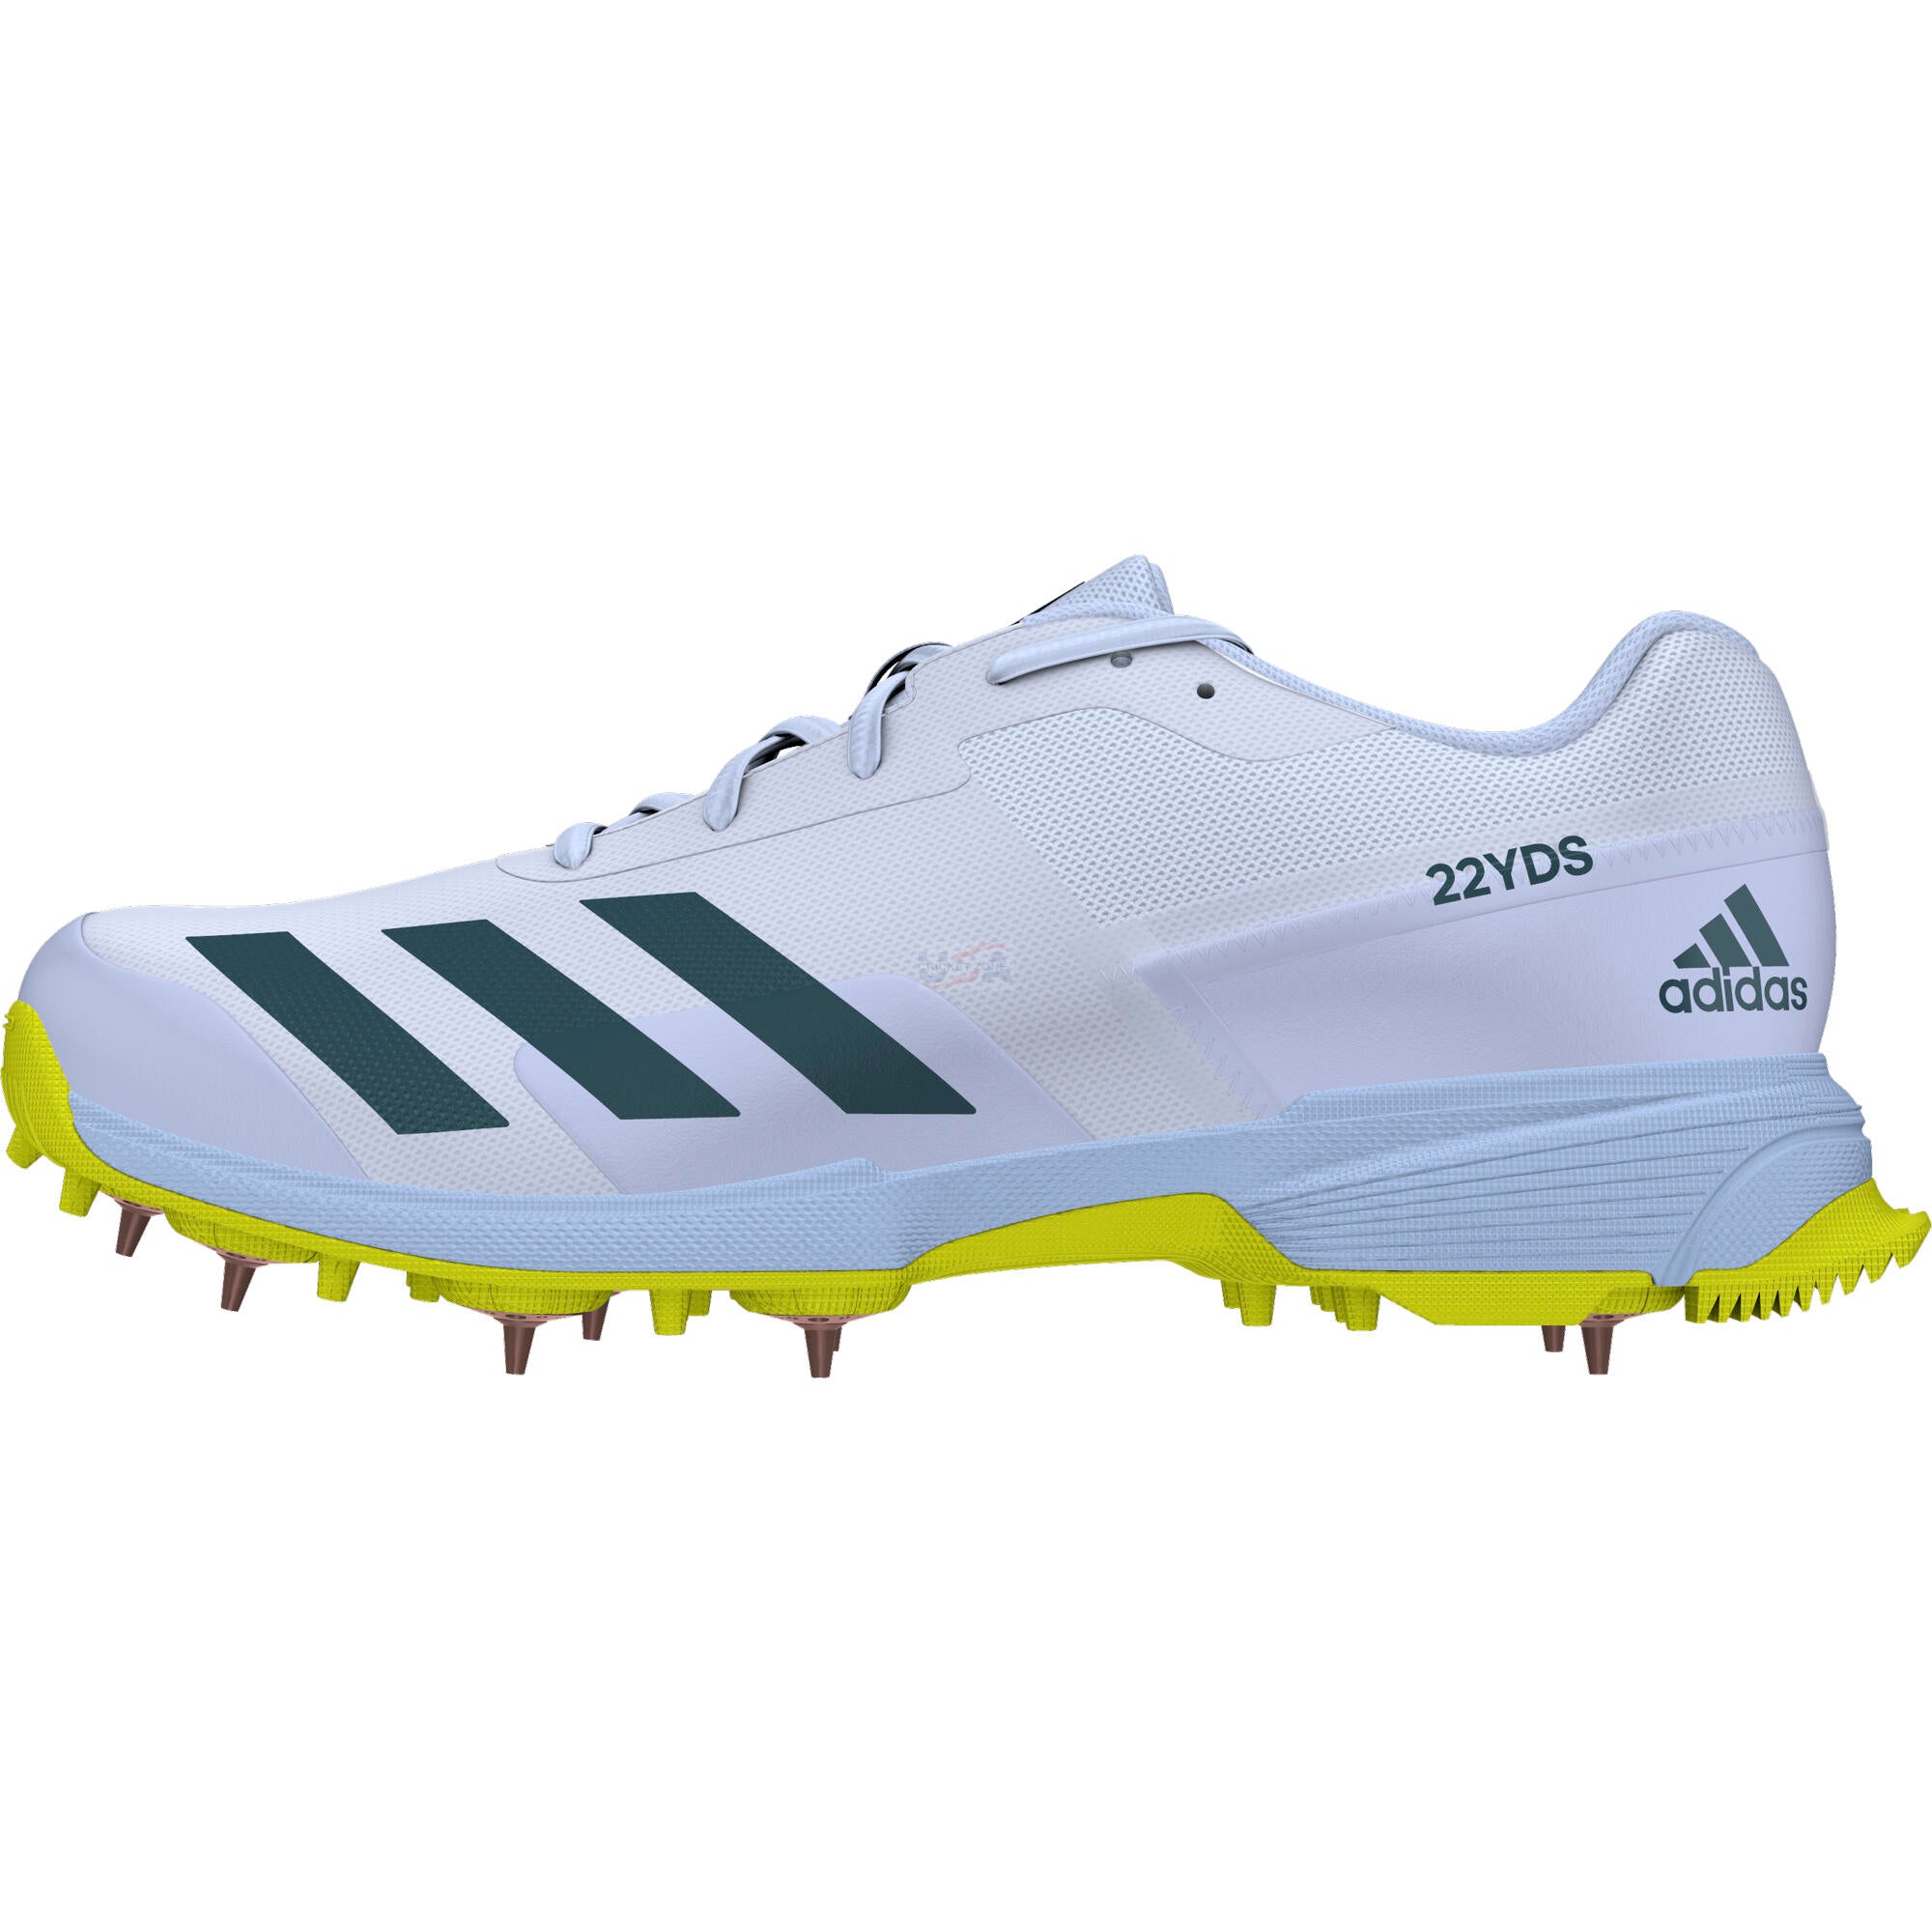 Adidas 22YDS Spikes - 2023